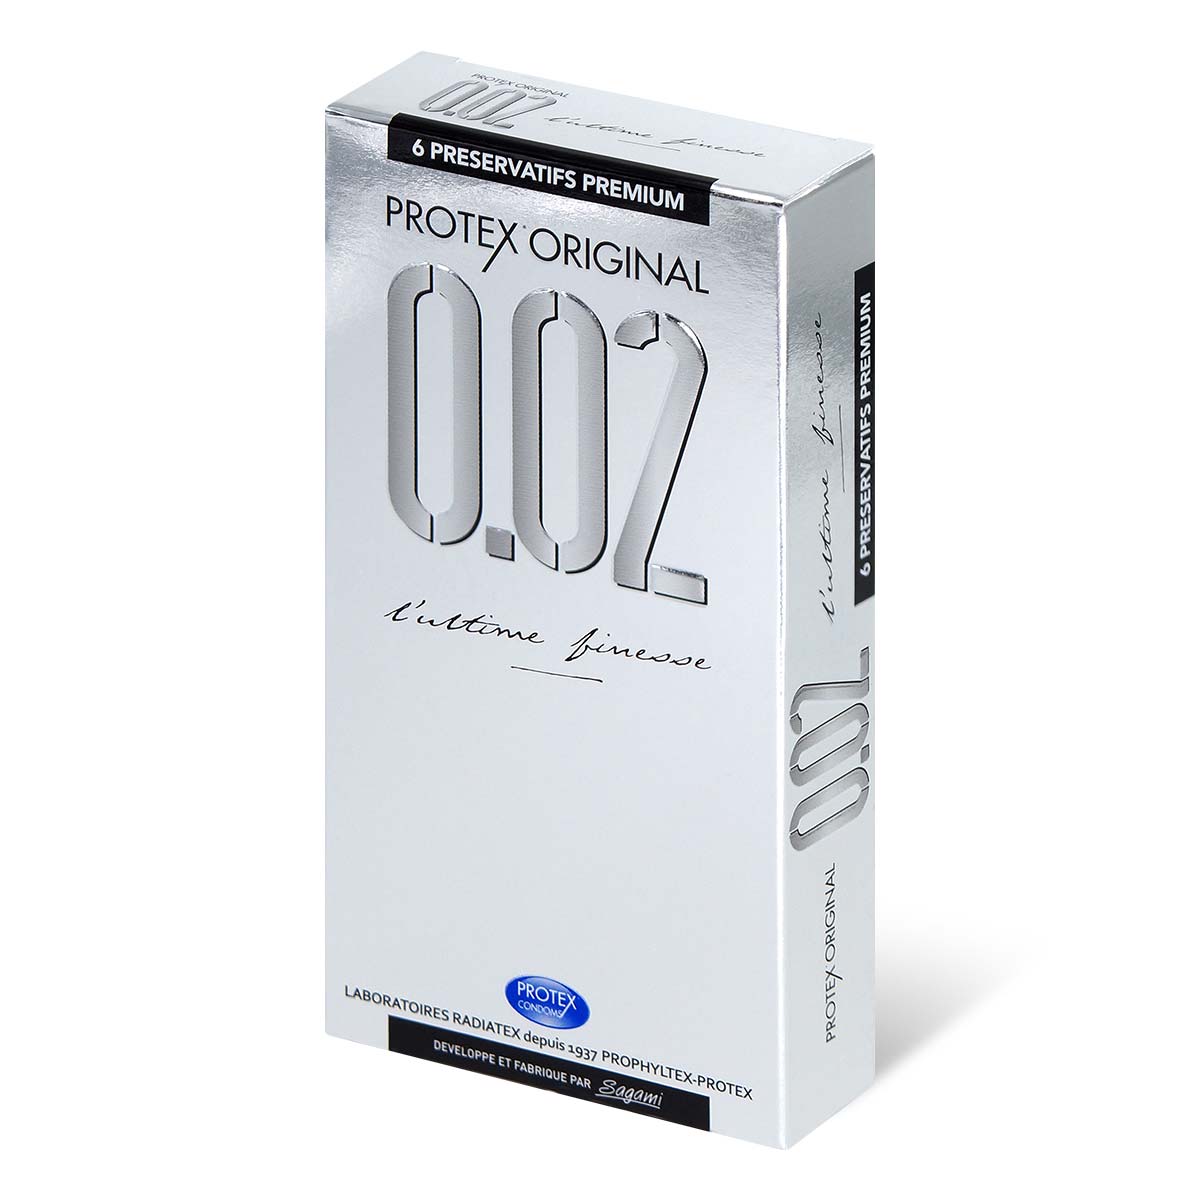 Protex Original 0.02 58mm Ultime Finesse Non-Latex 6's Pack PU Condom-p_1